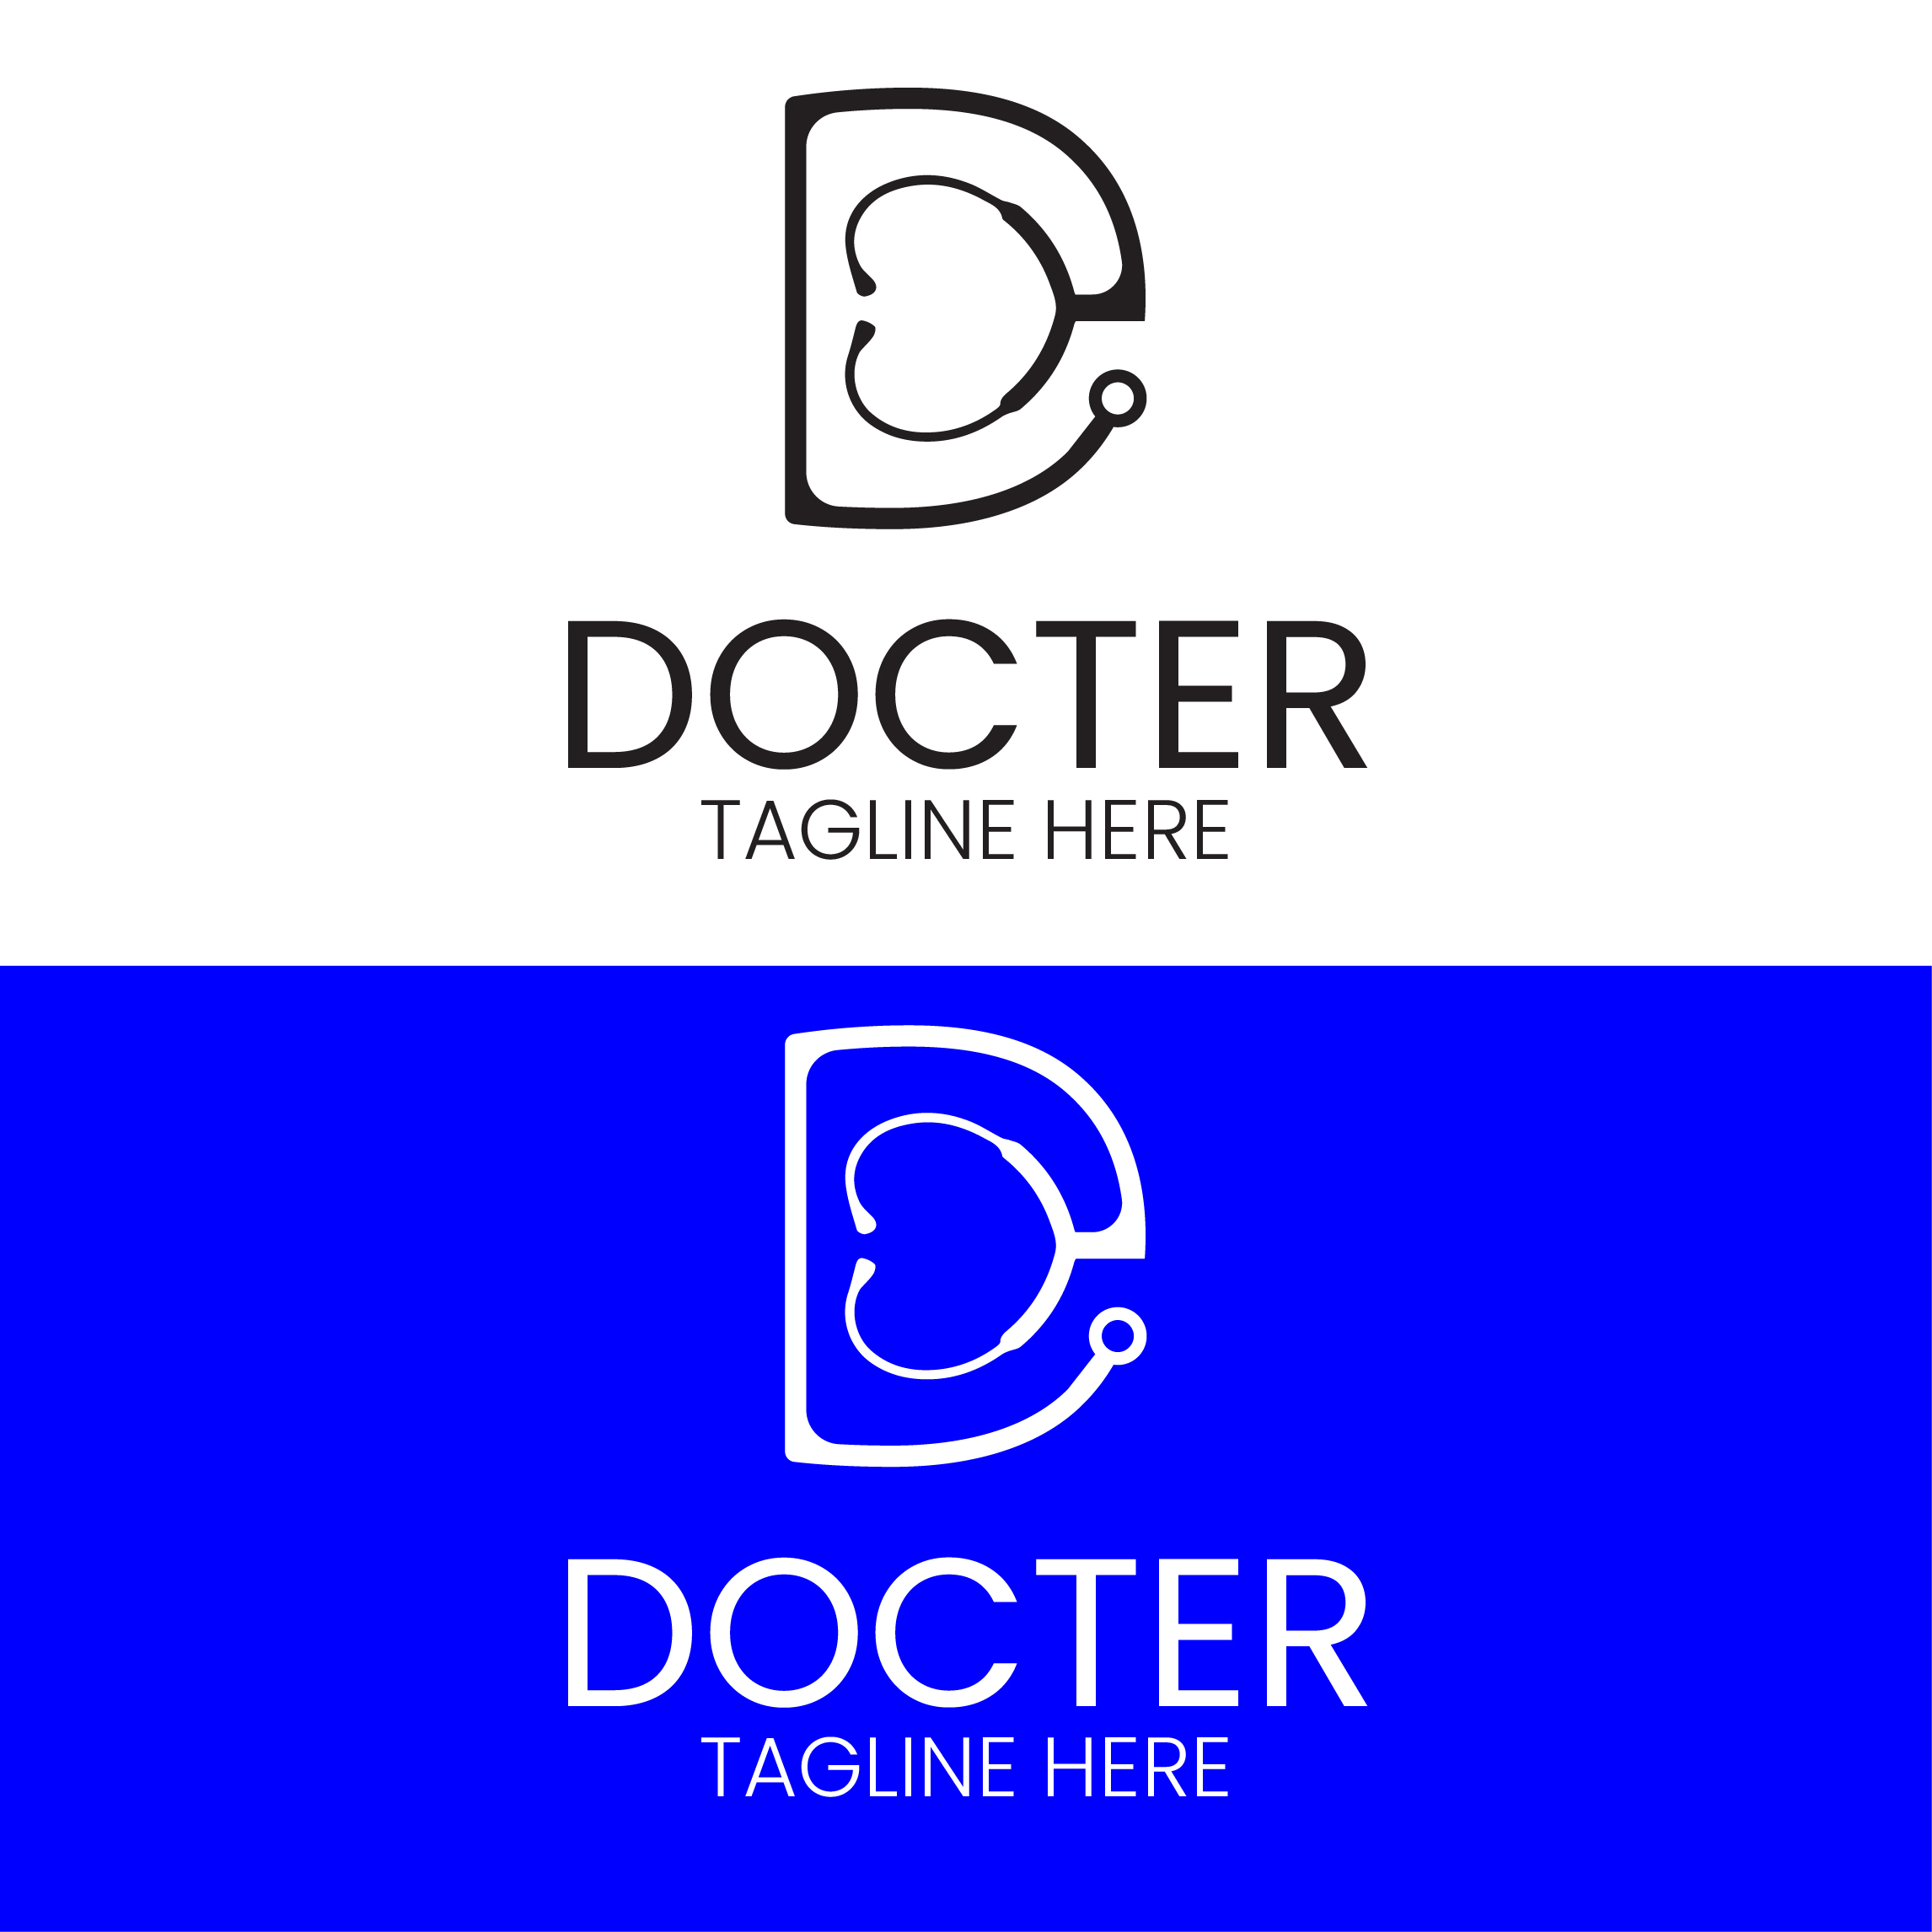 D Letter logo cover image.